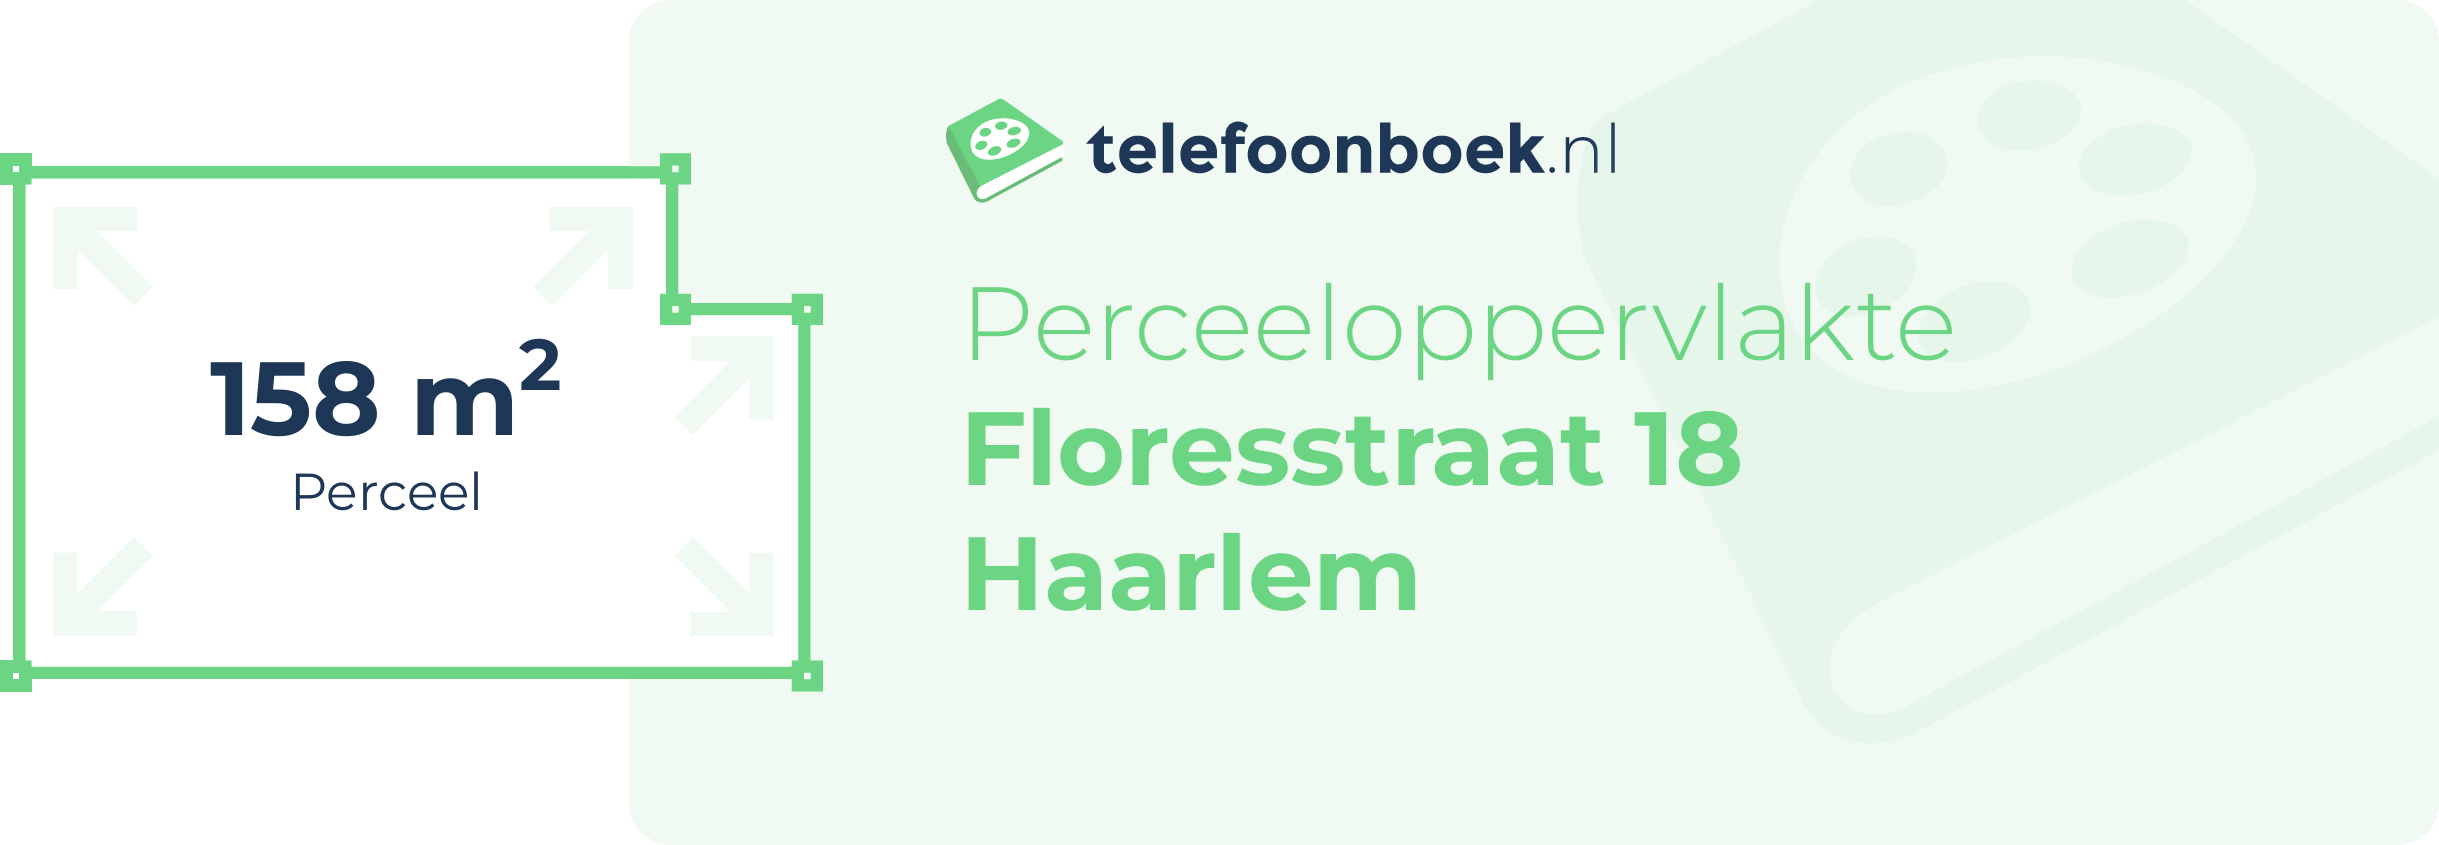 Perceeloppervlakte Floresstraat 18 Haarlem